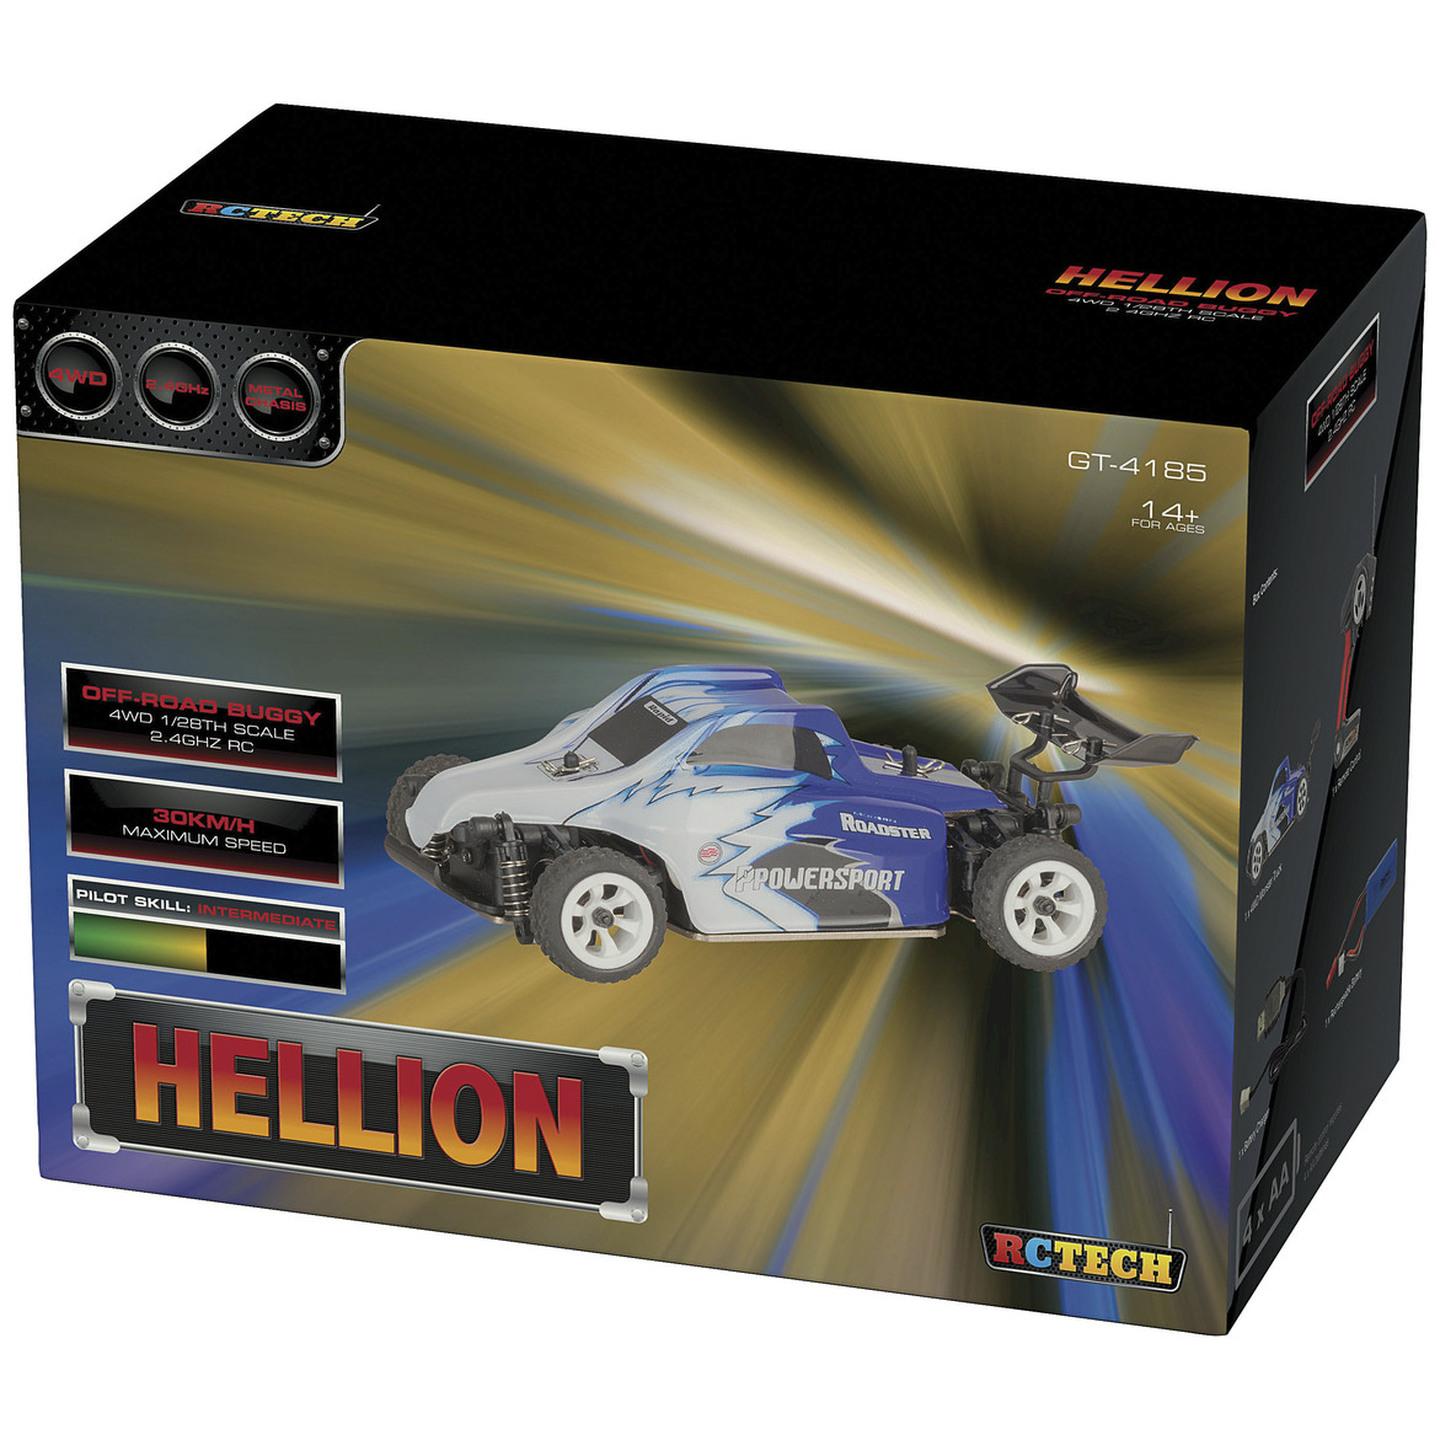 Hellion High Speed 4WD R/C Buggy 1:28